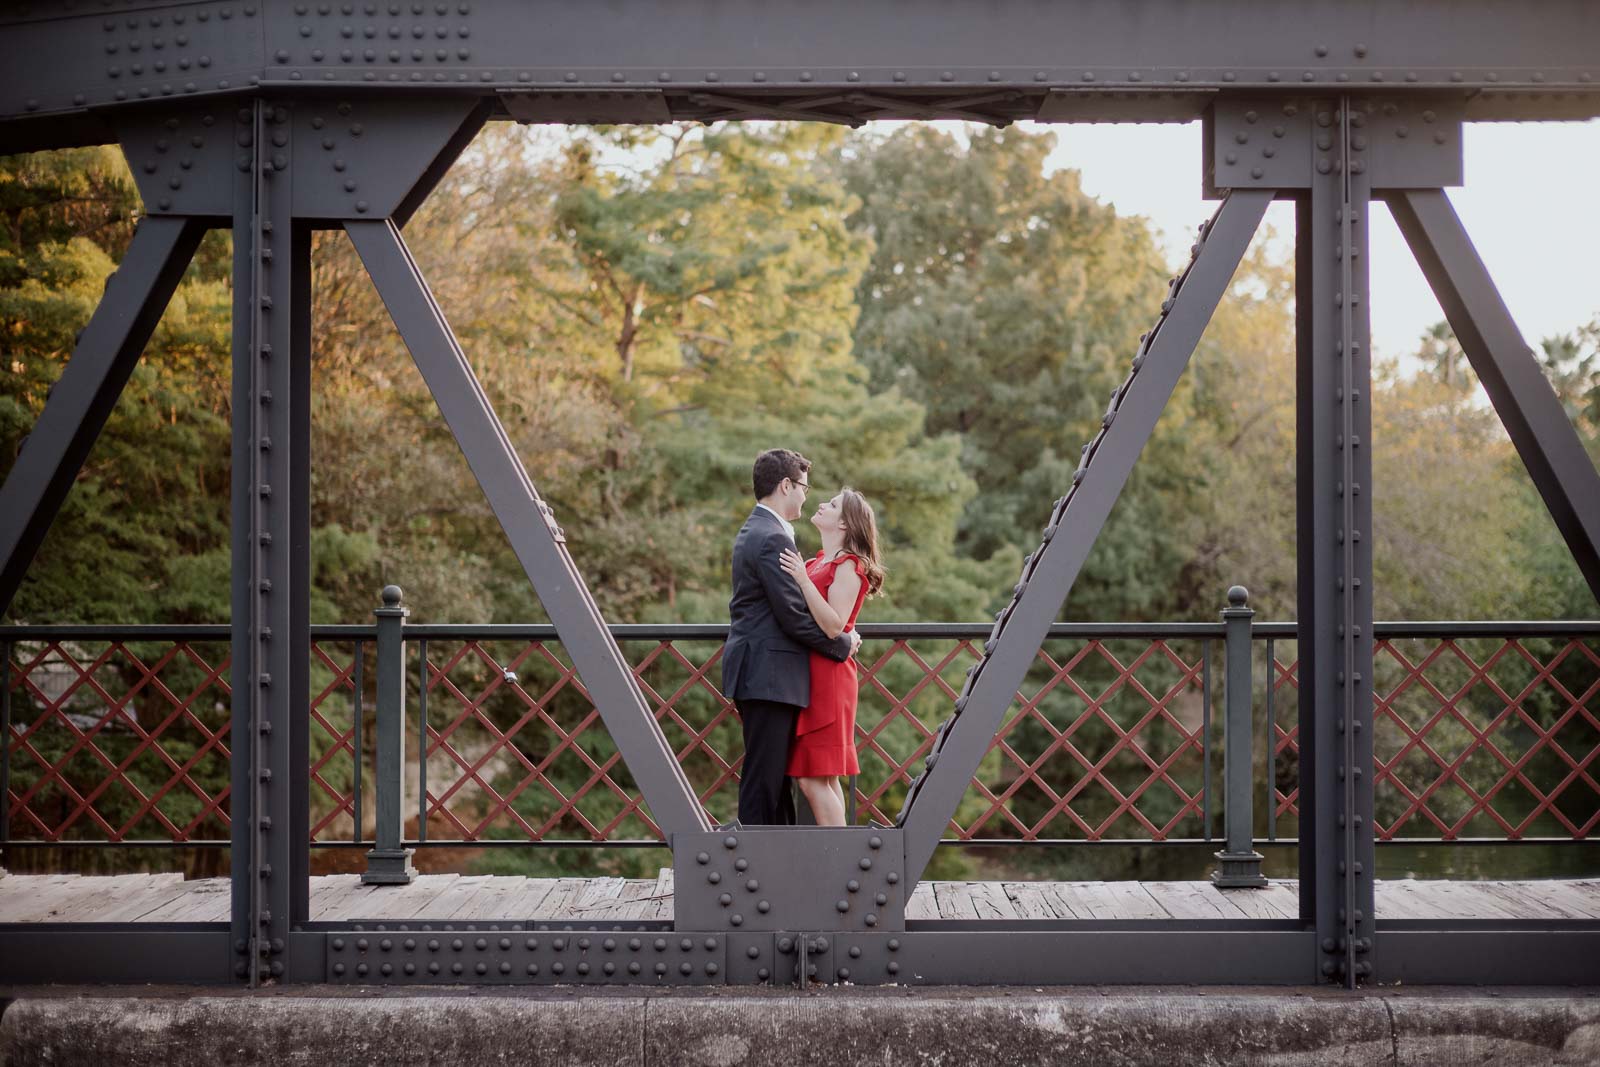 Arsenal Bridge in the King William area shows couple posing on the bridge - Leica Wedding Photographer-- 1San Antonio engagement shoot downtown - Philip Thomas